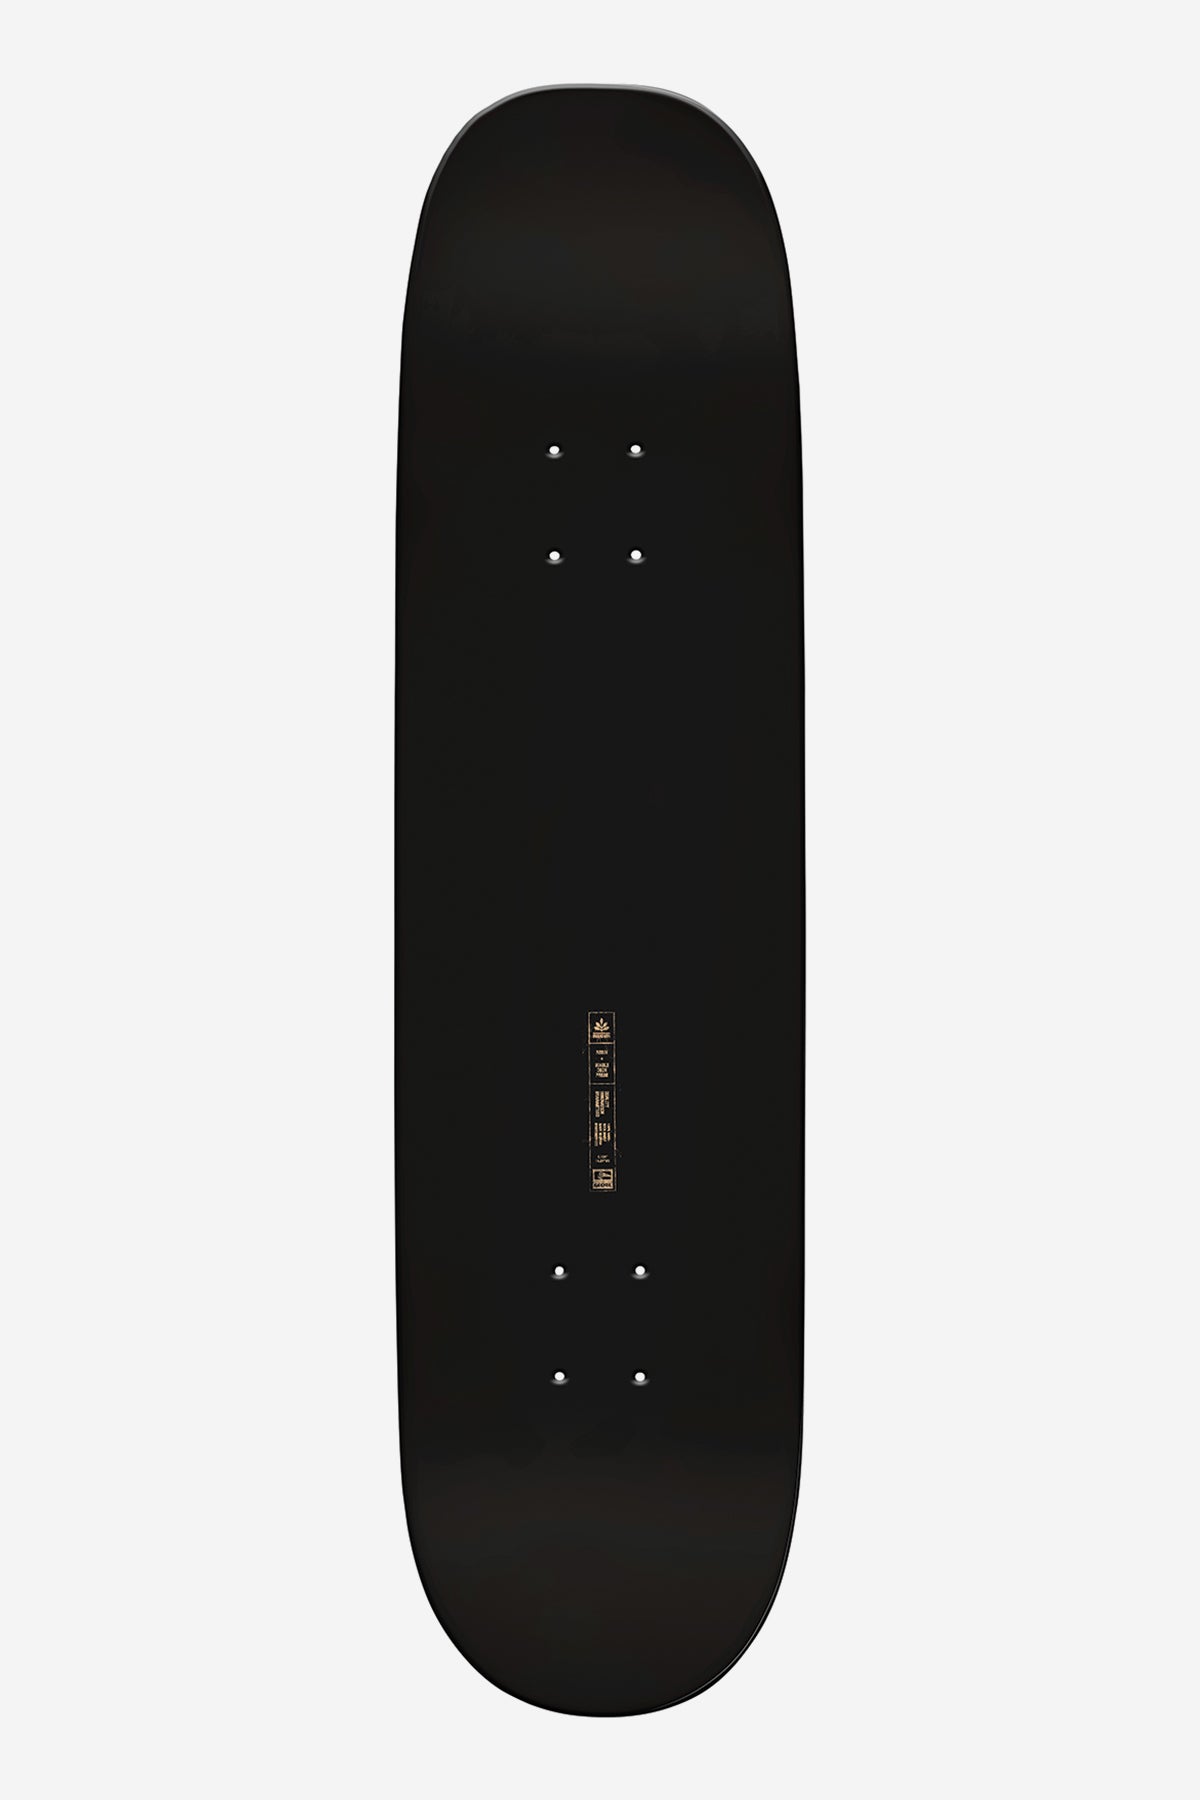 chisel noir don'tf&ckit 8.25" skateboard deck